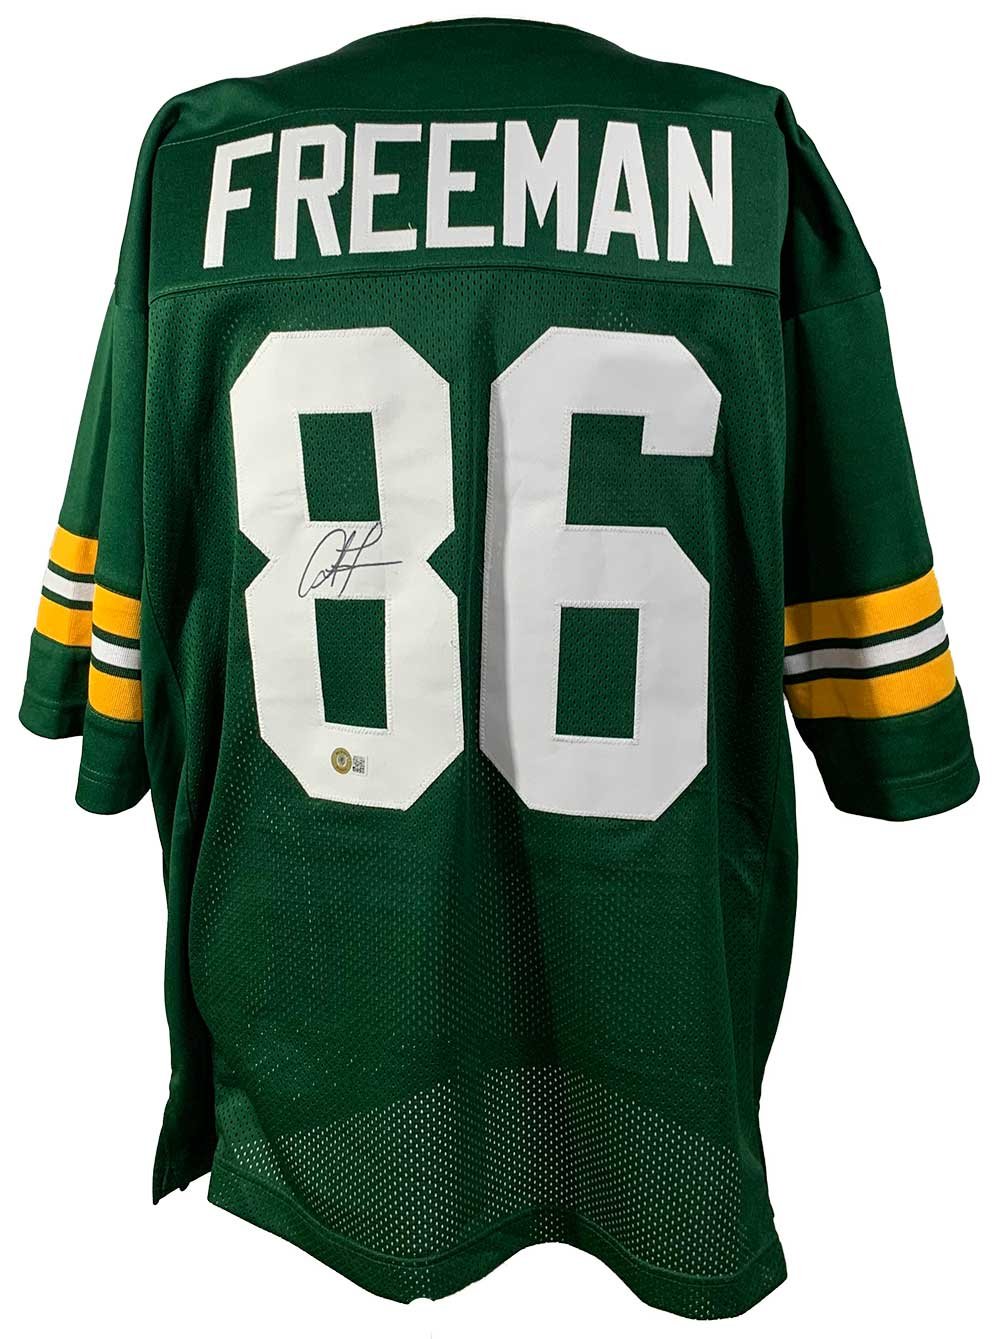 freeman jersey